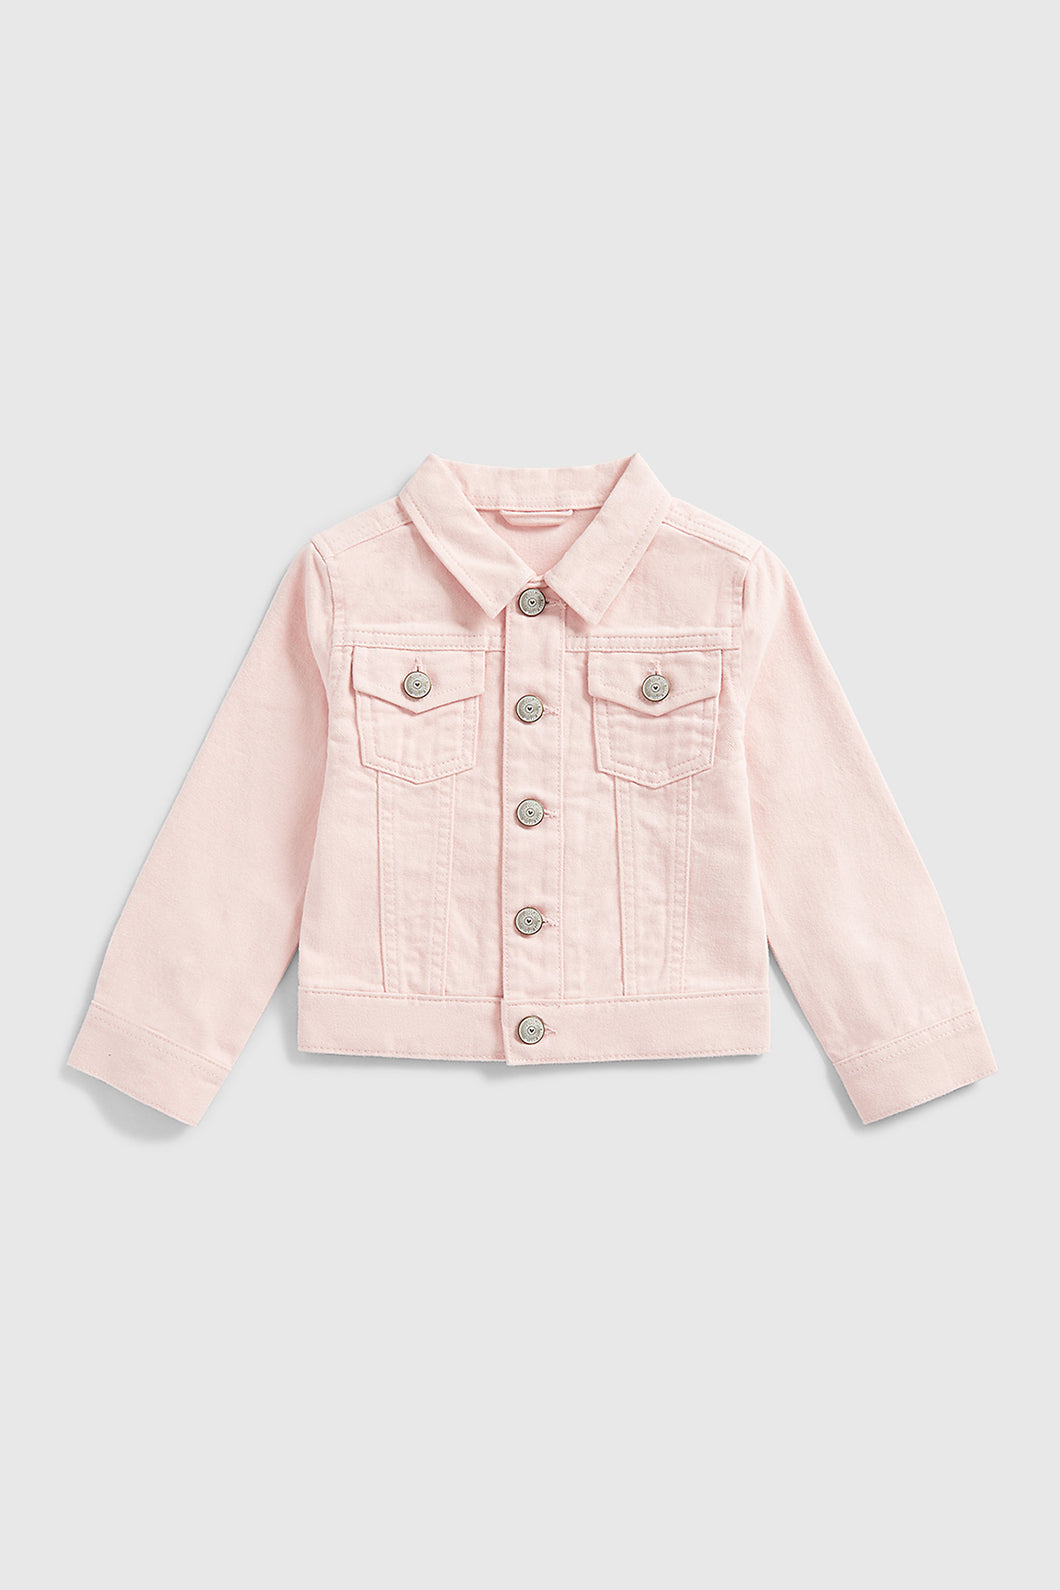 Mothercare Pink Denim Jacket